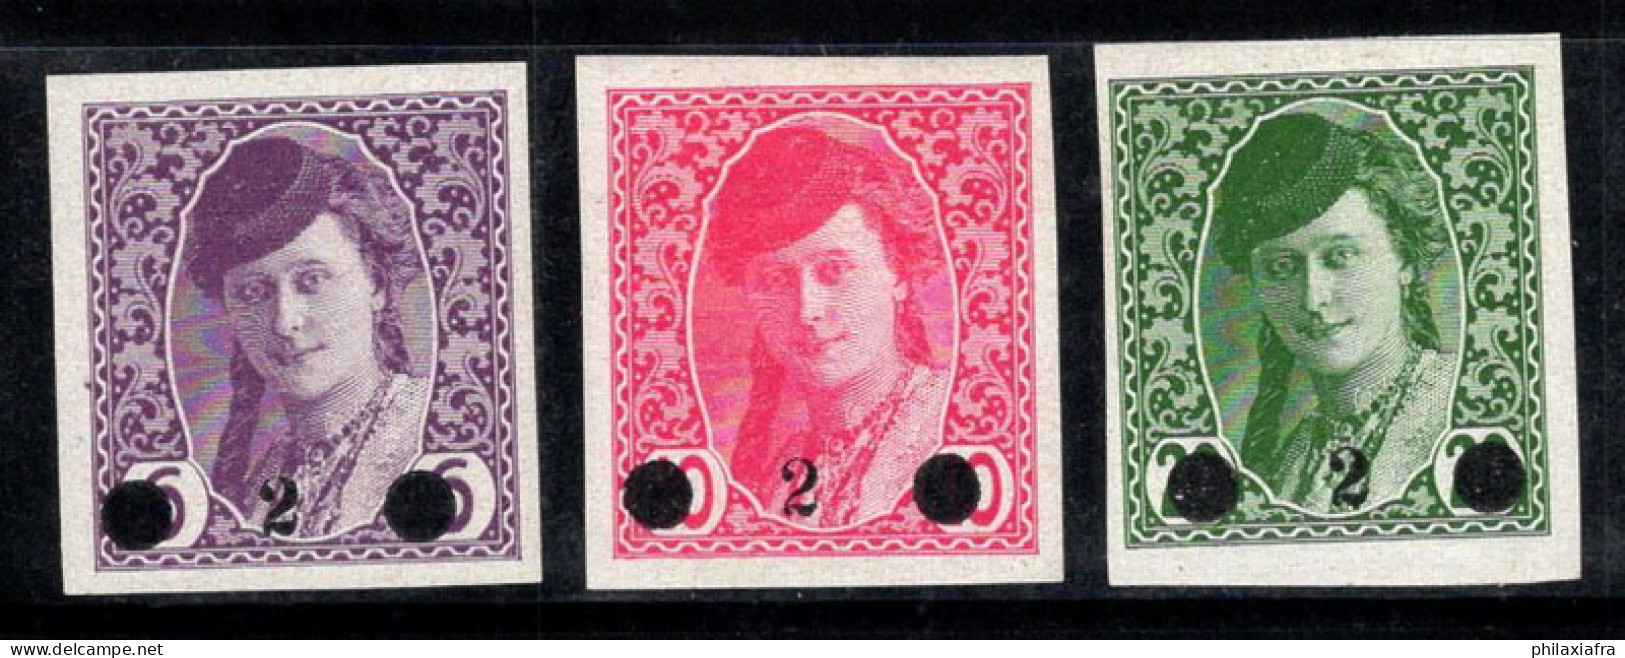 Yougoslavie 1919 Mi. 27-29 Neuf * MH 100% Surimprimé Bosnie-Herzégovine - Unused Stamps